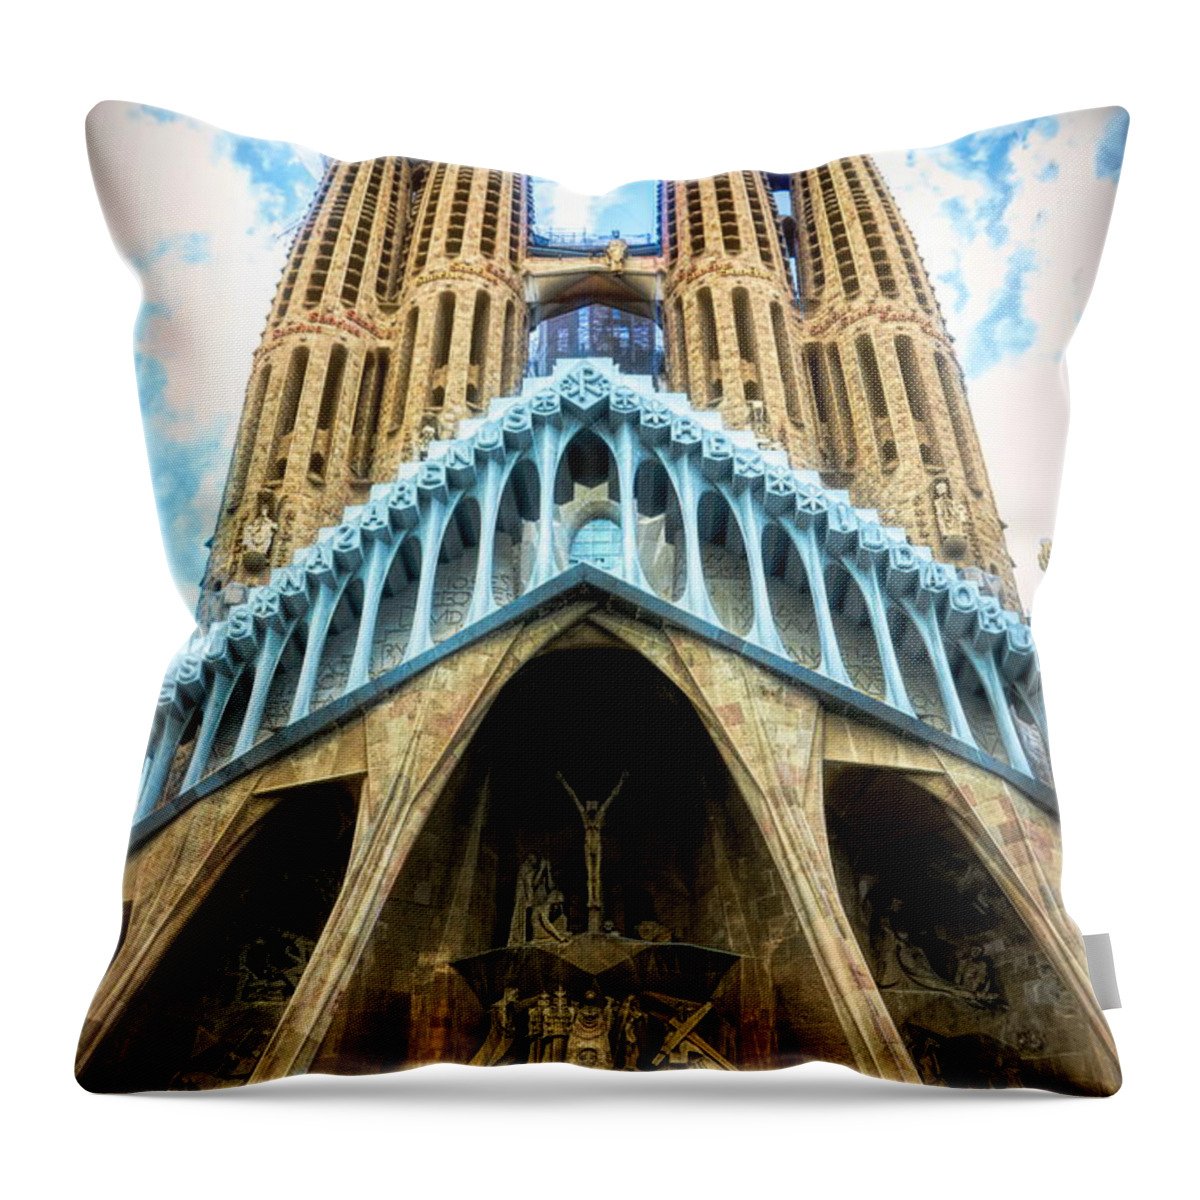 La Sagrada Familia Throw Pillow featuring the digital art Details Gaudi La Sagrada Familia Catholic Church by Chuck Kuhn